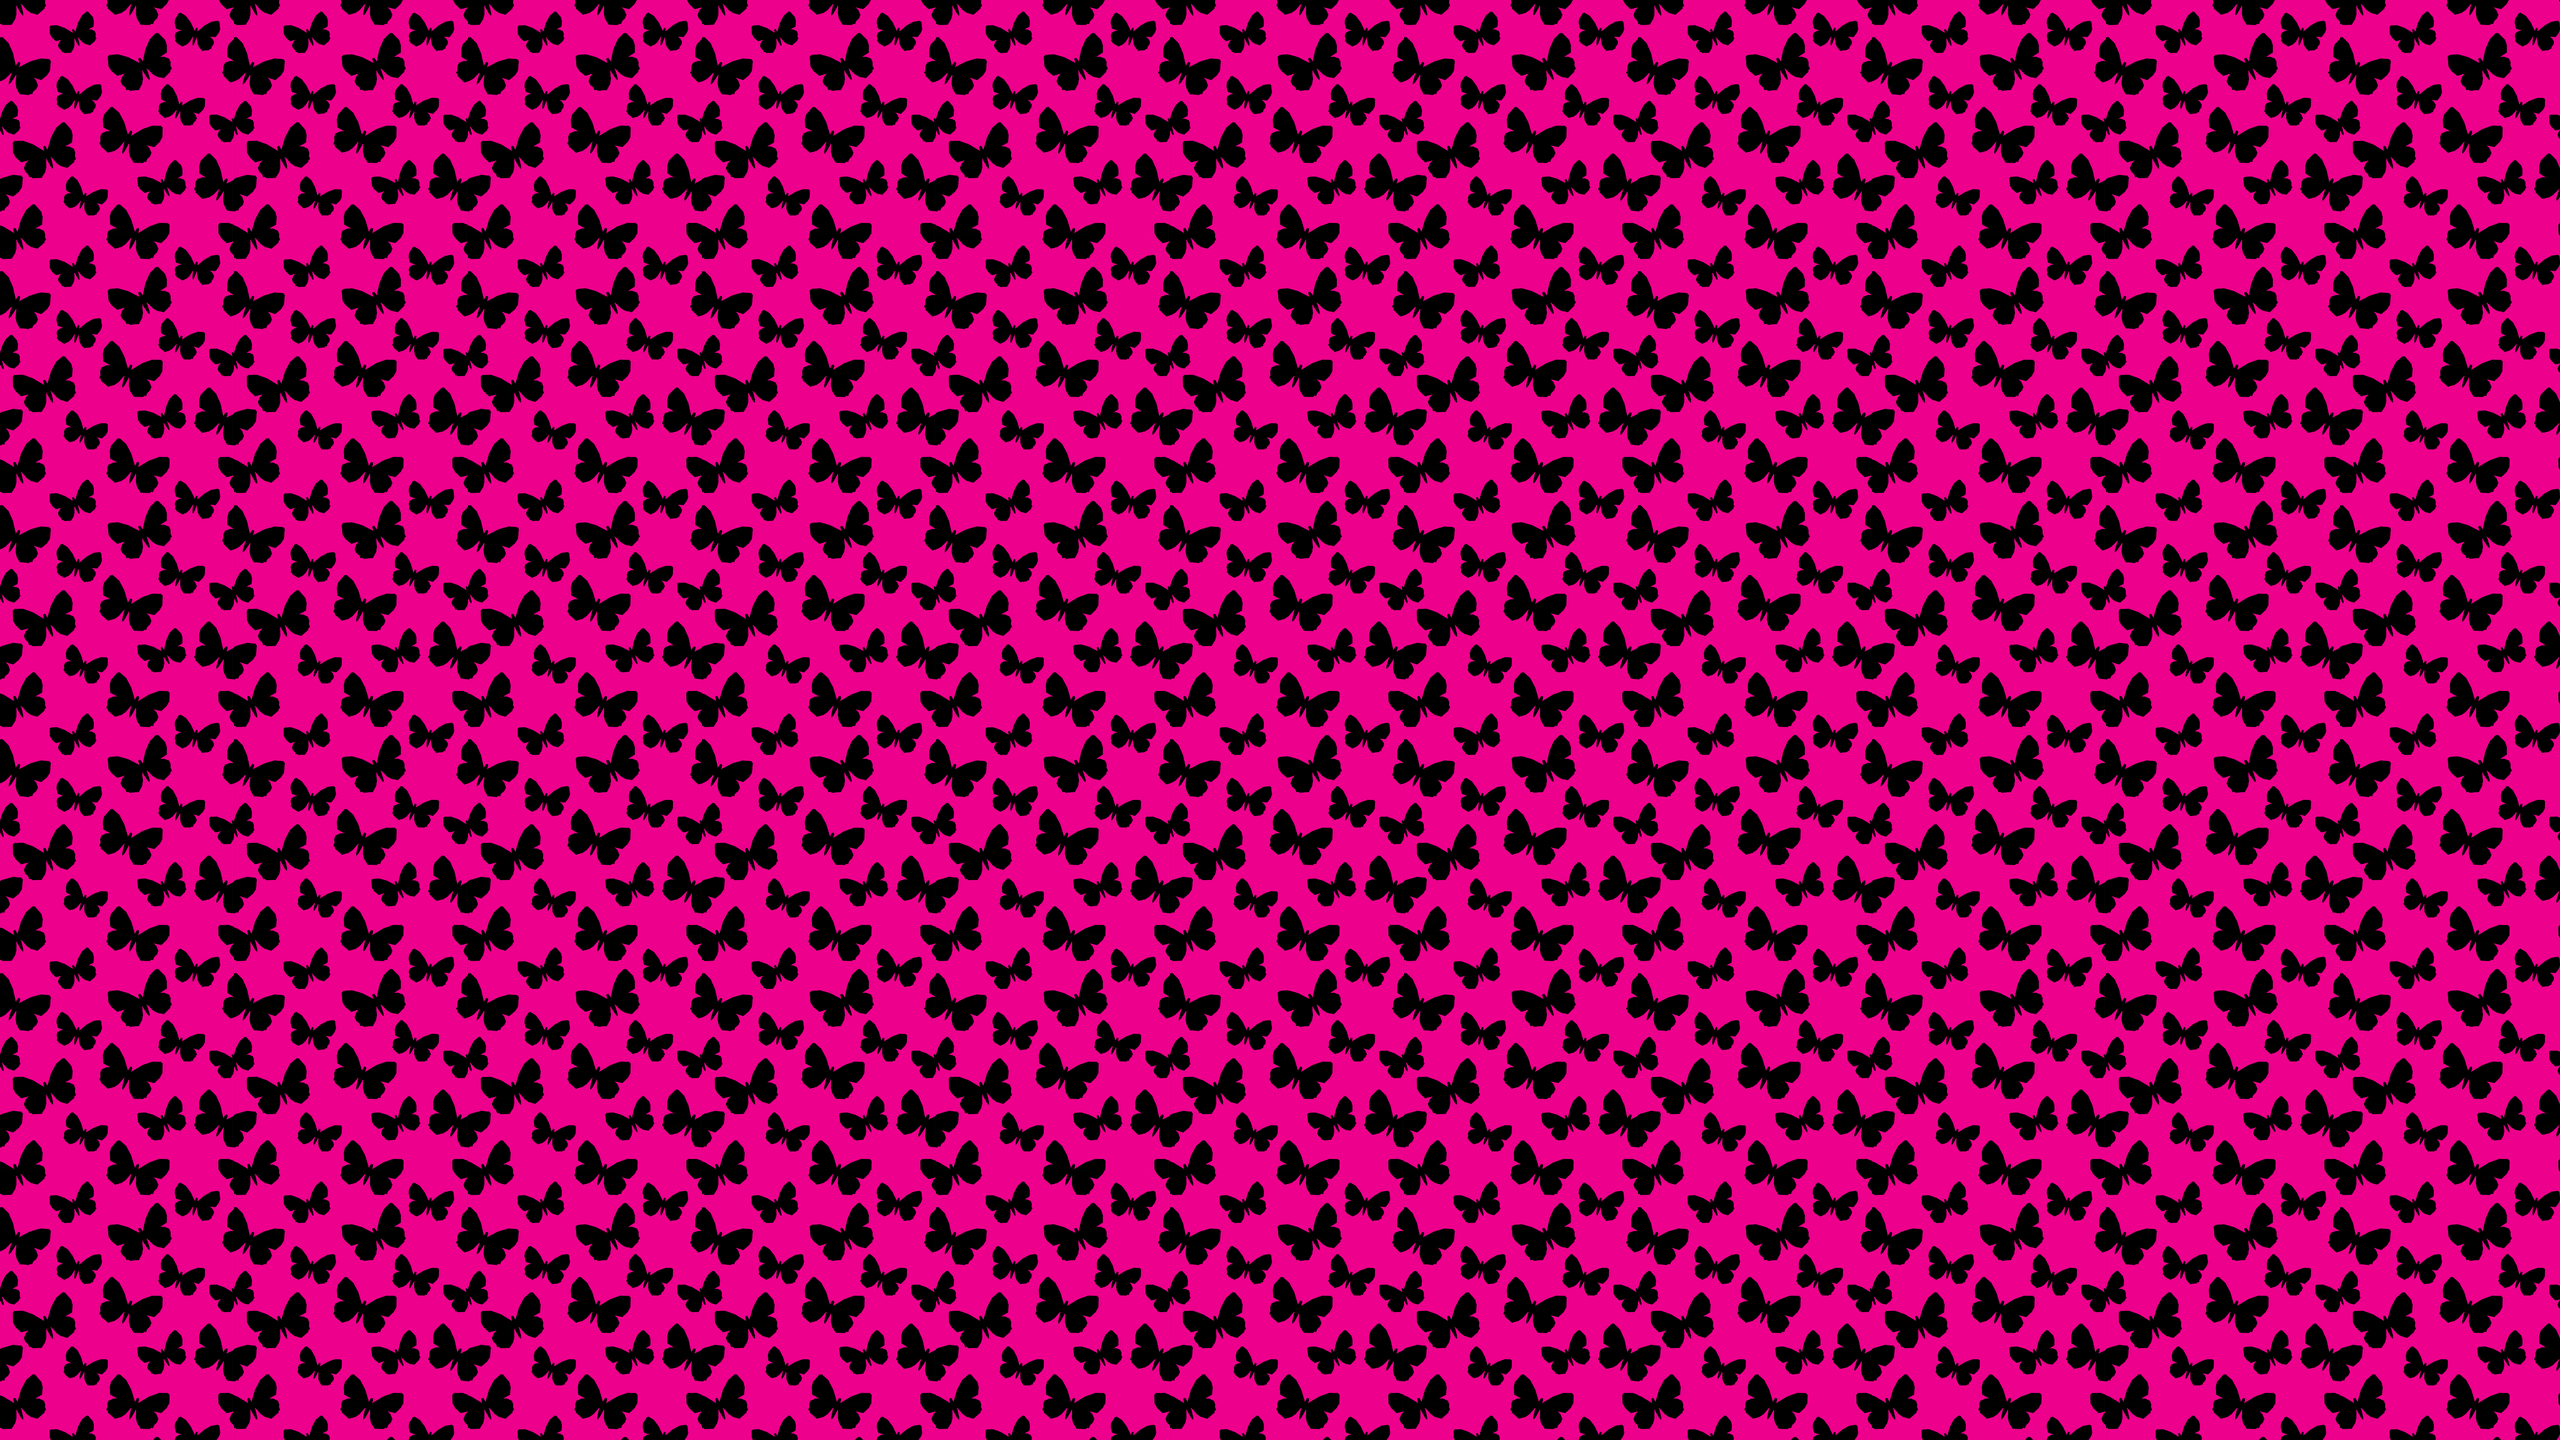 Pink Butterflies Desktop Wallpaper Is Easy Just Save The